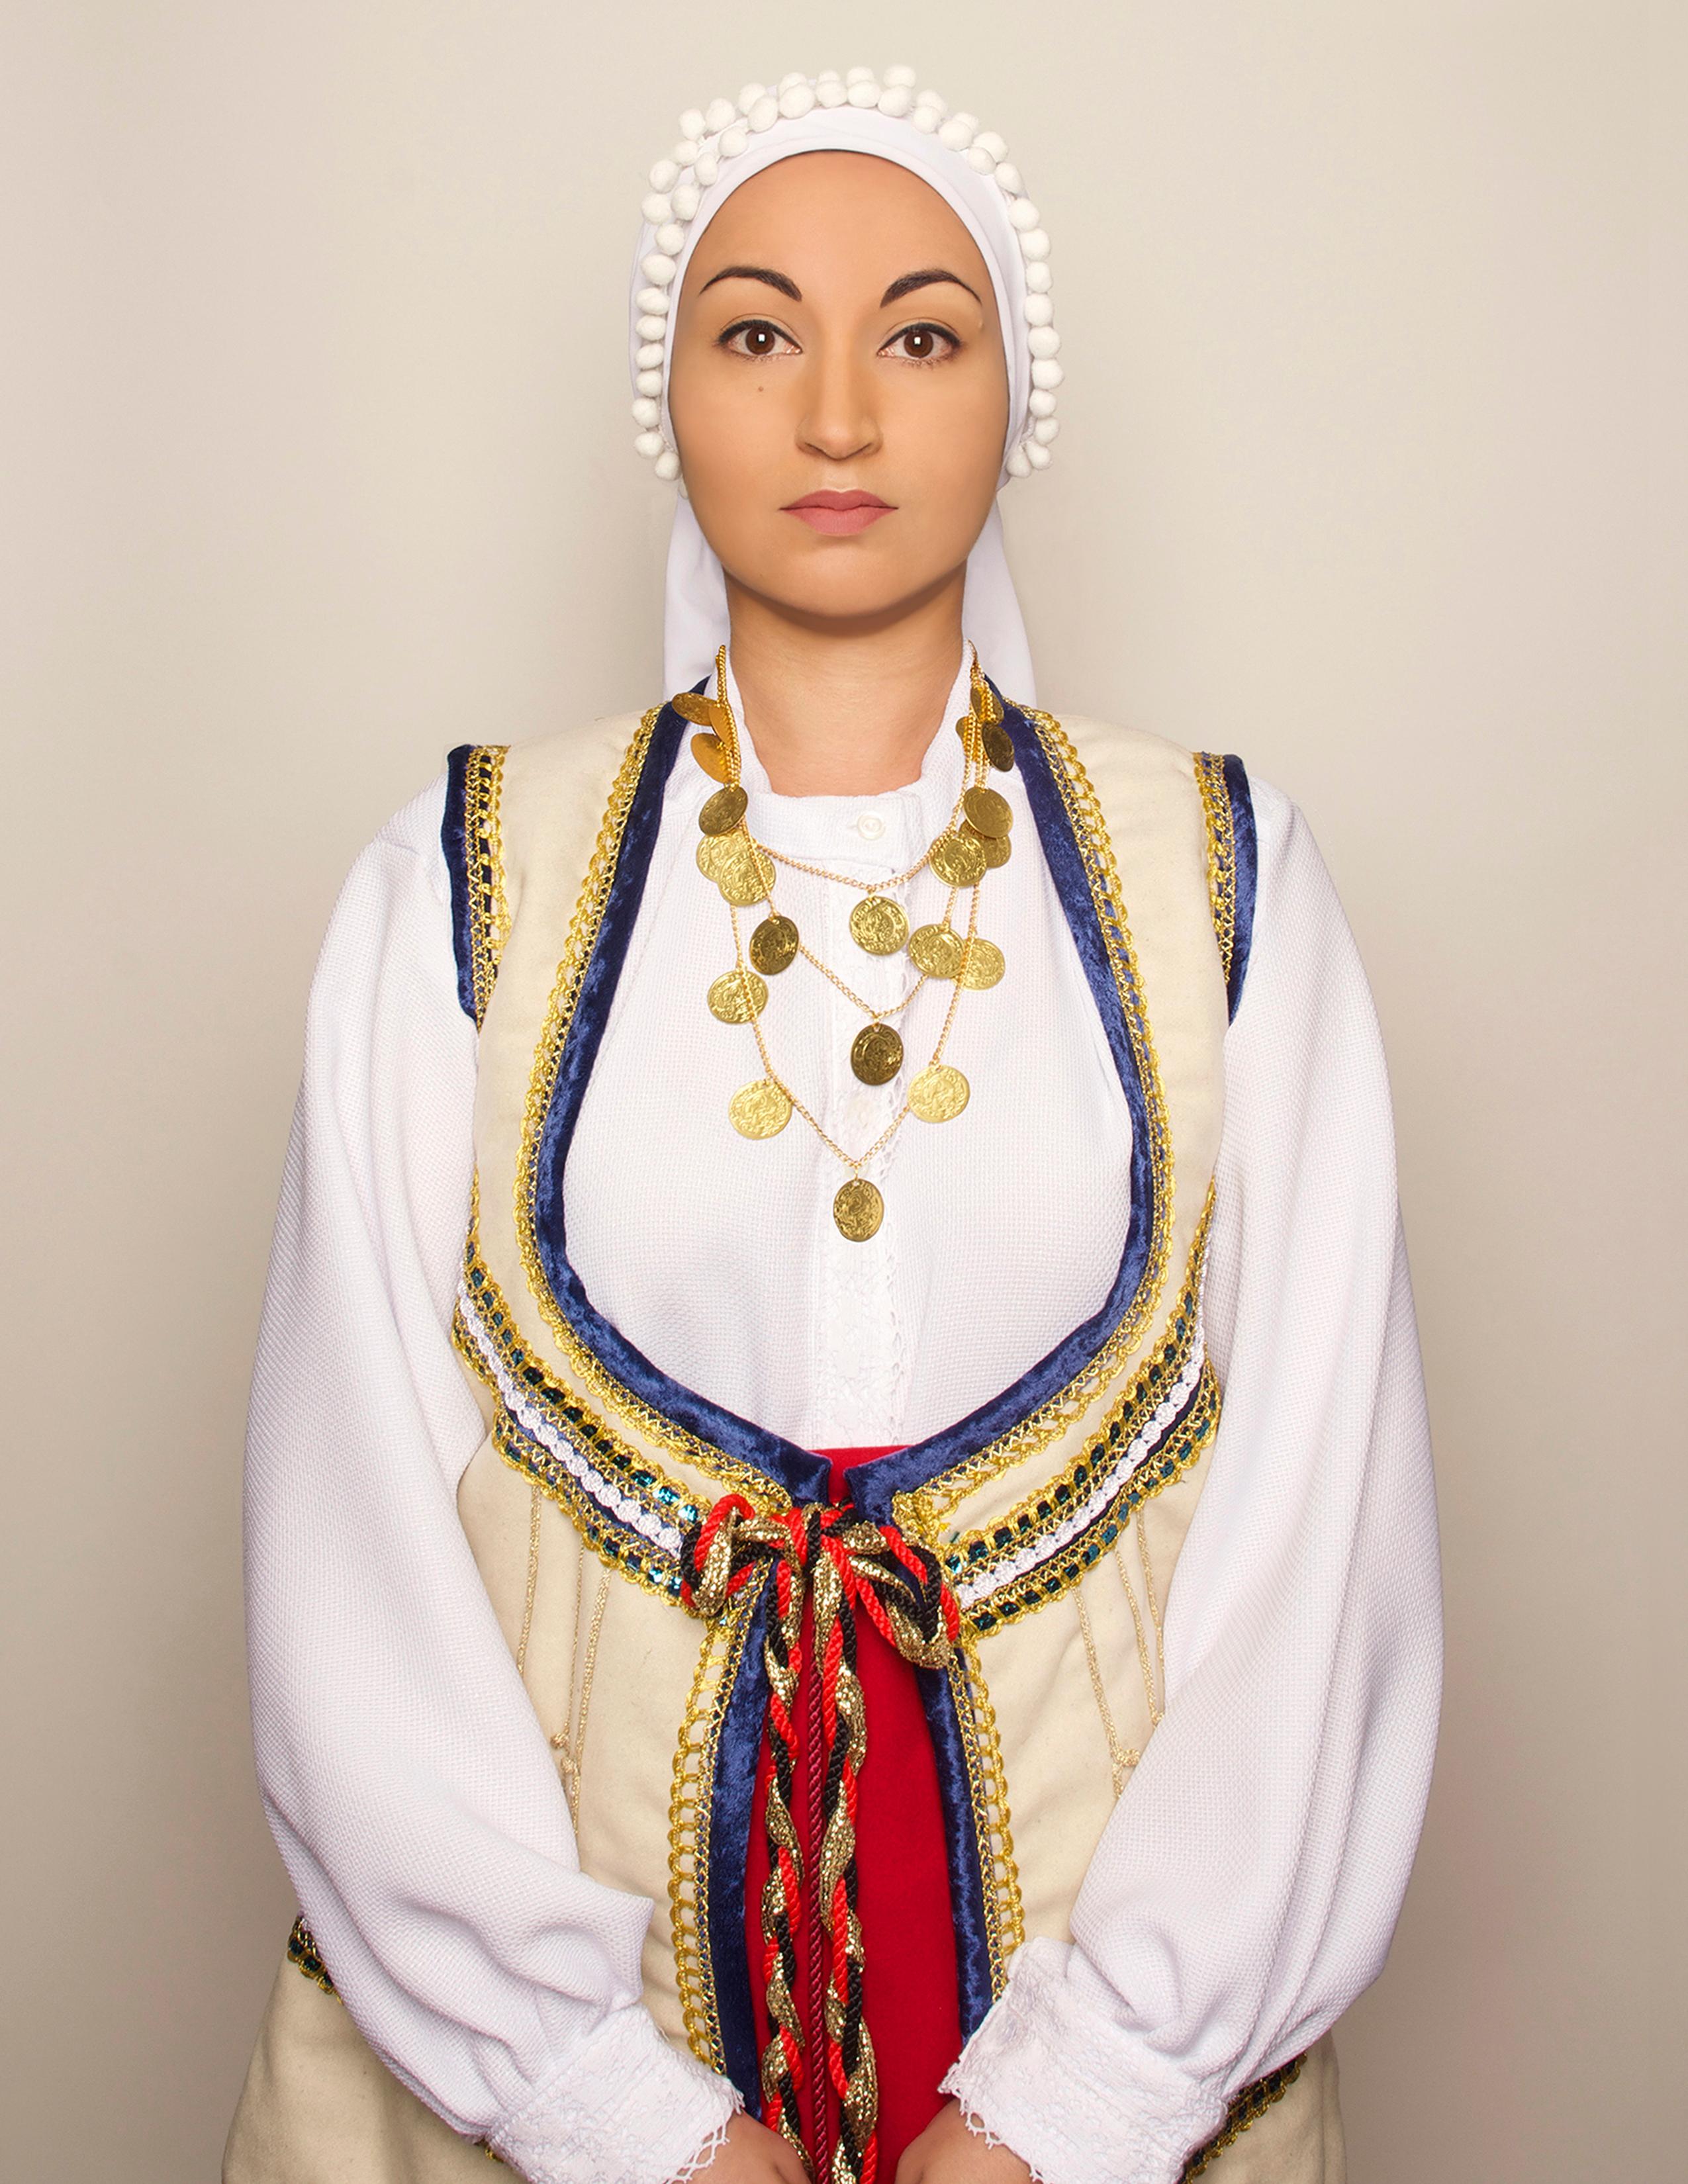 Sheinina Raj Portrait Photograph - "Greek Woman", contemporary, photography, selfportraiture, blue, yellow, red